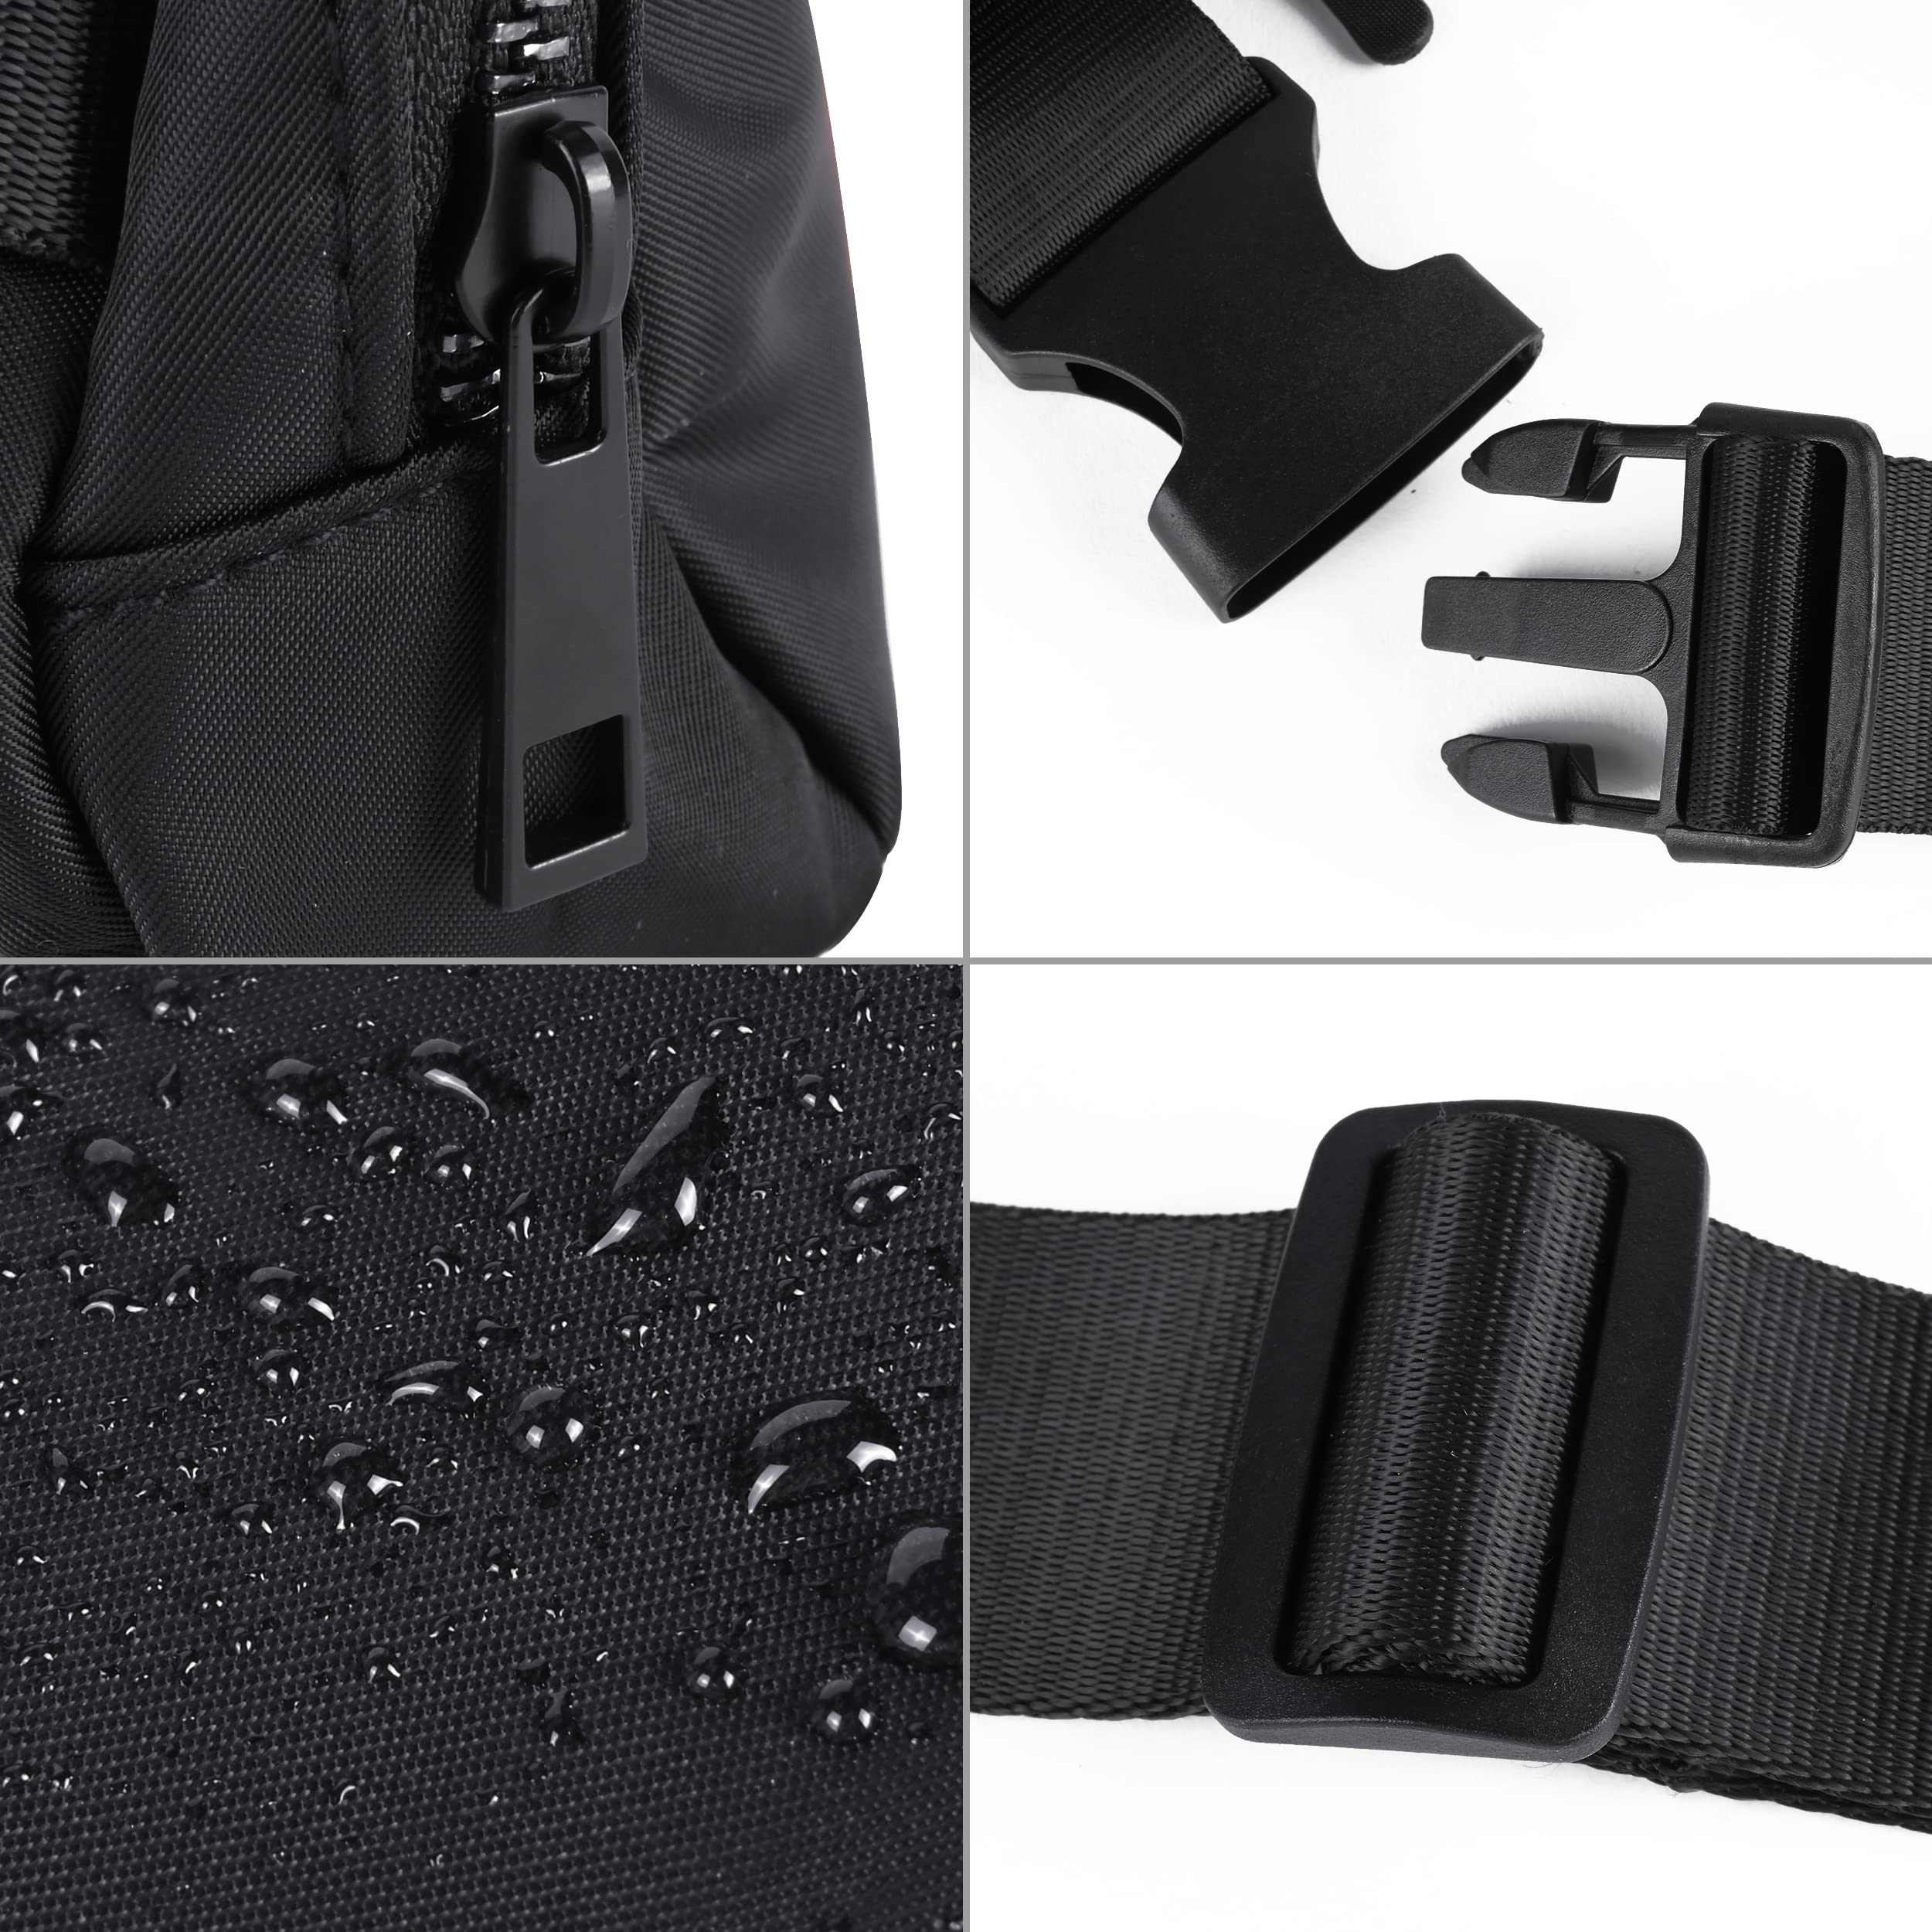 Leotruny Unisex Belt Bag Everywhere Waist Pack Waterproof for Travel Running Hiking (C01-Black)